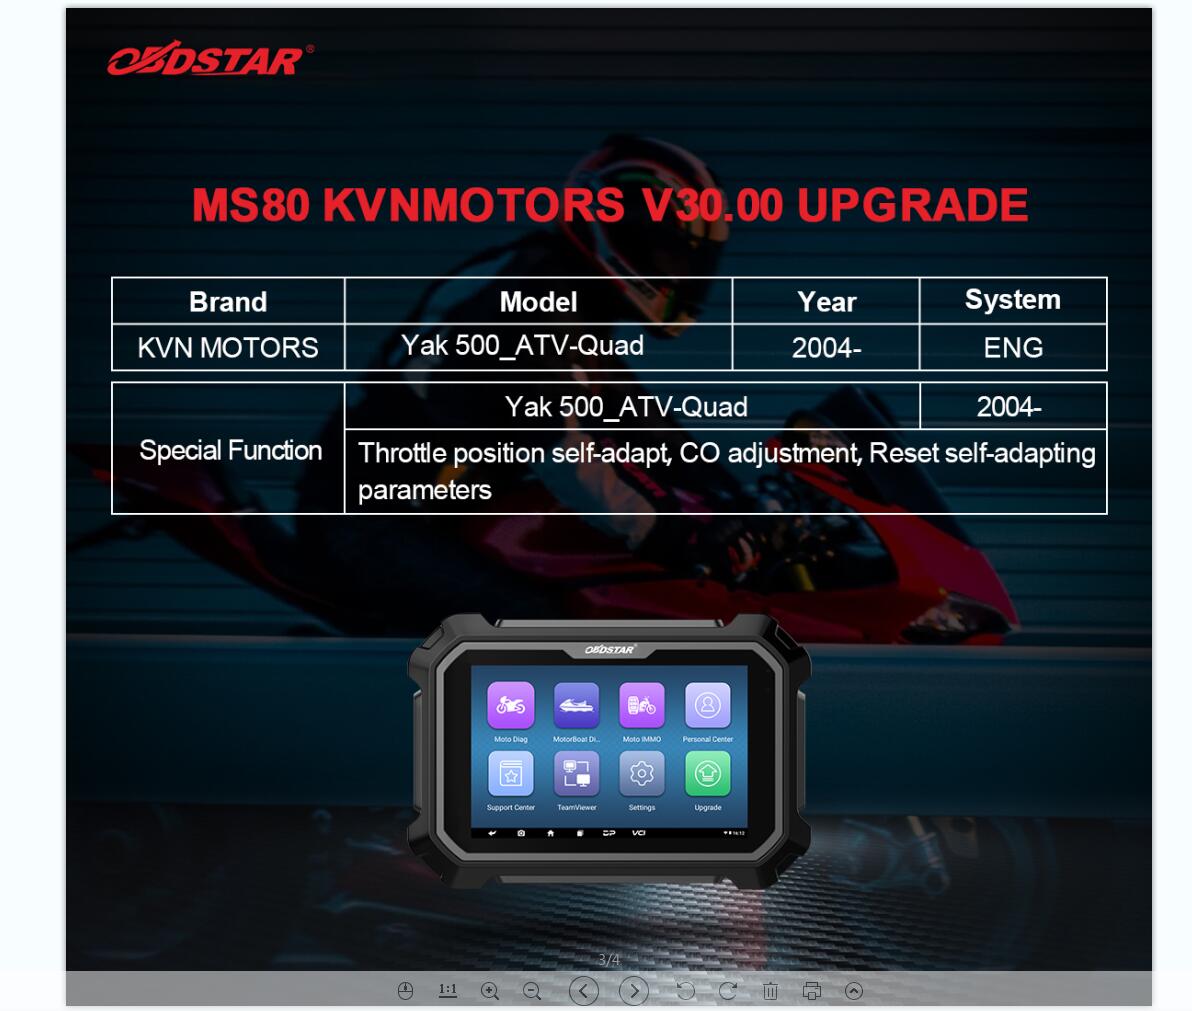 OBDstar MS80 KVNMOTORS V30.00 upgrade